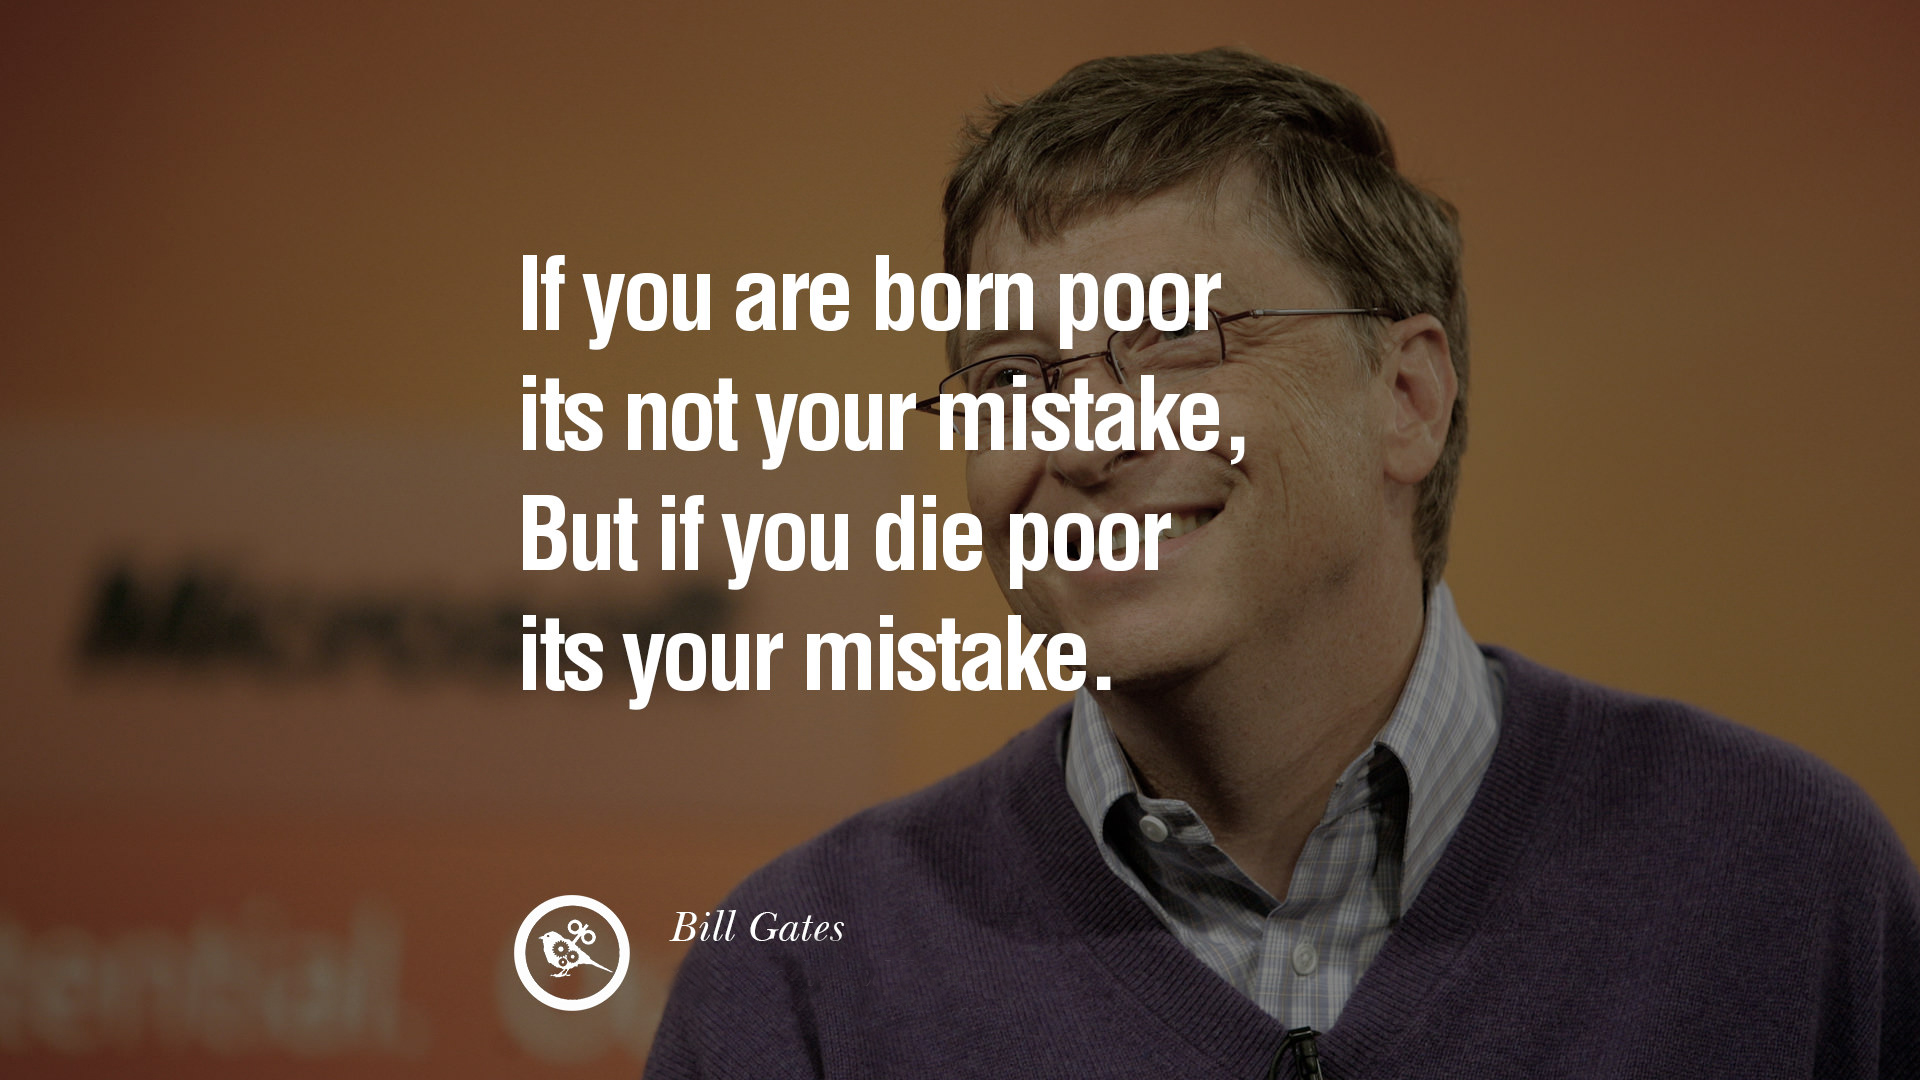 Bill Gates Millionaire Quotes image